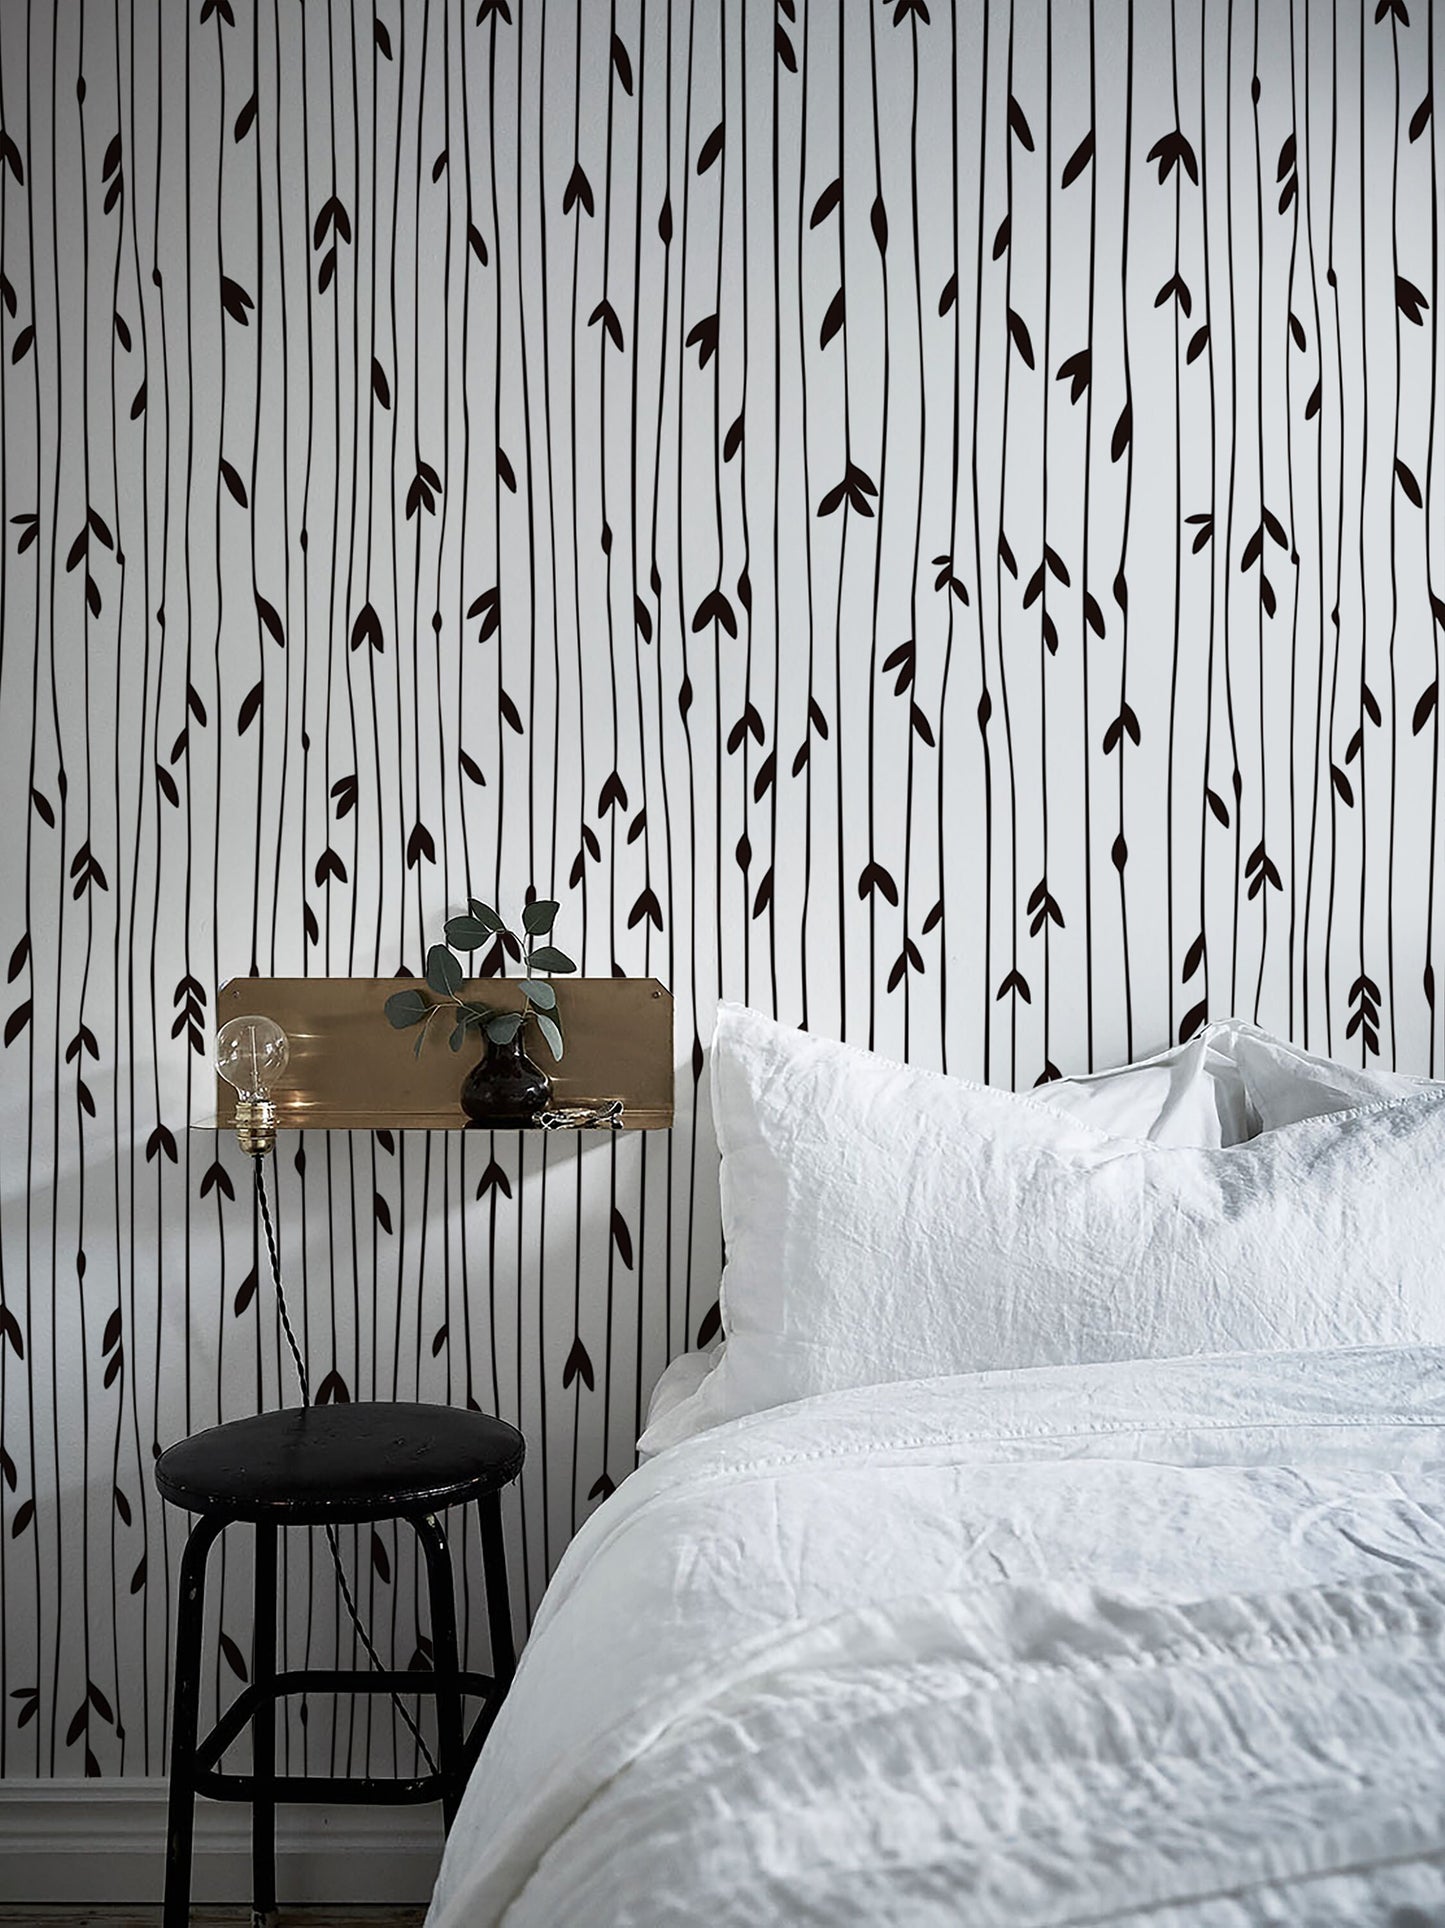 Removable Wallpaper, Minimalistic Wallpaper, Peel and Stick Wallpaper, WallPaper, Leaves Wallpaper - B060